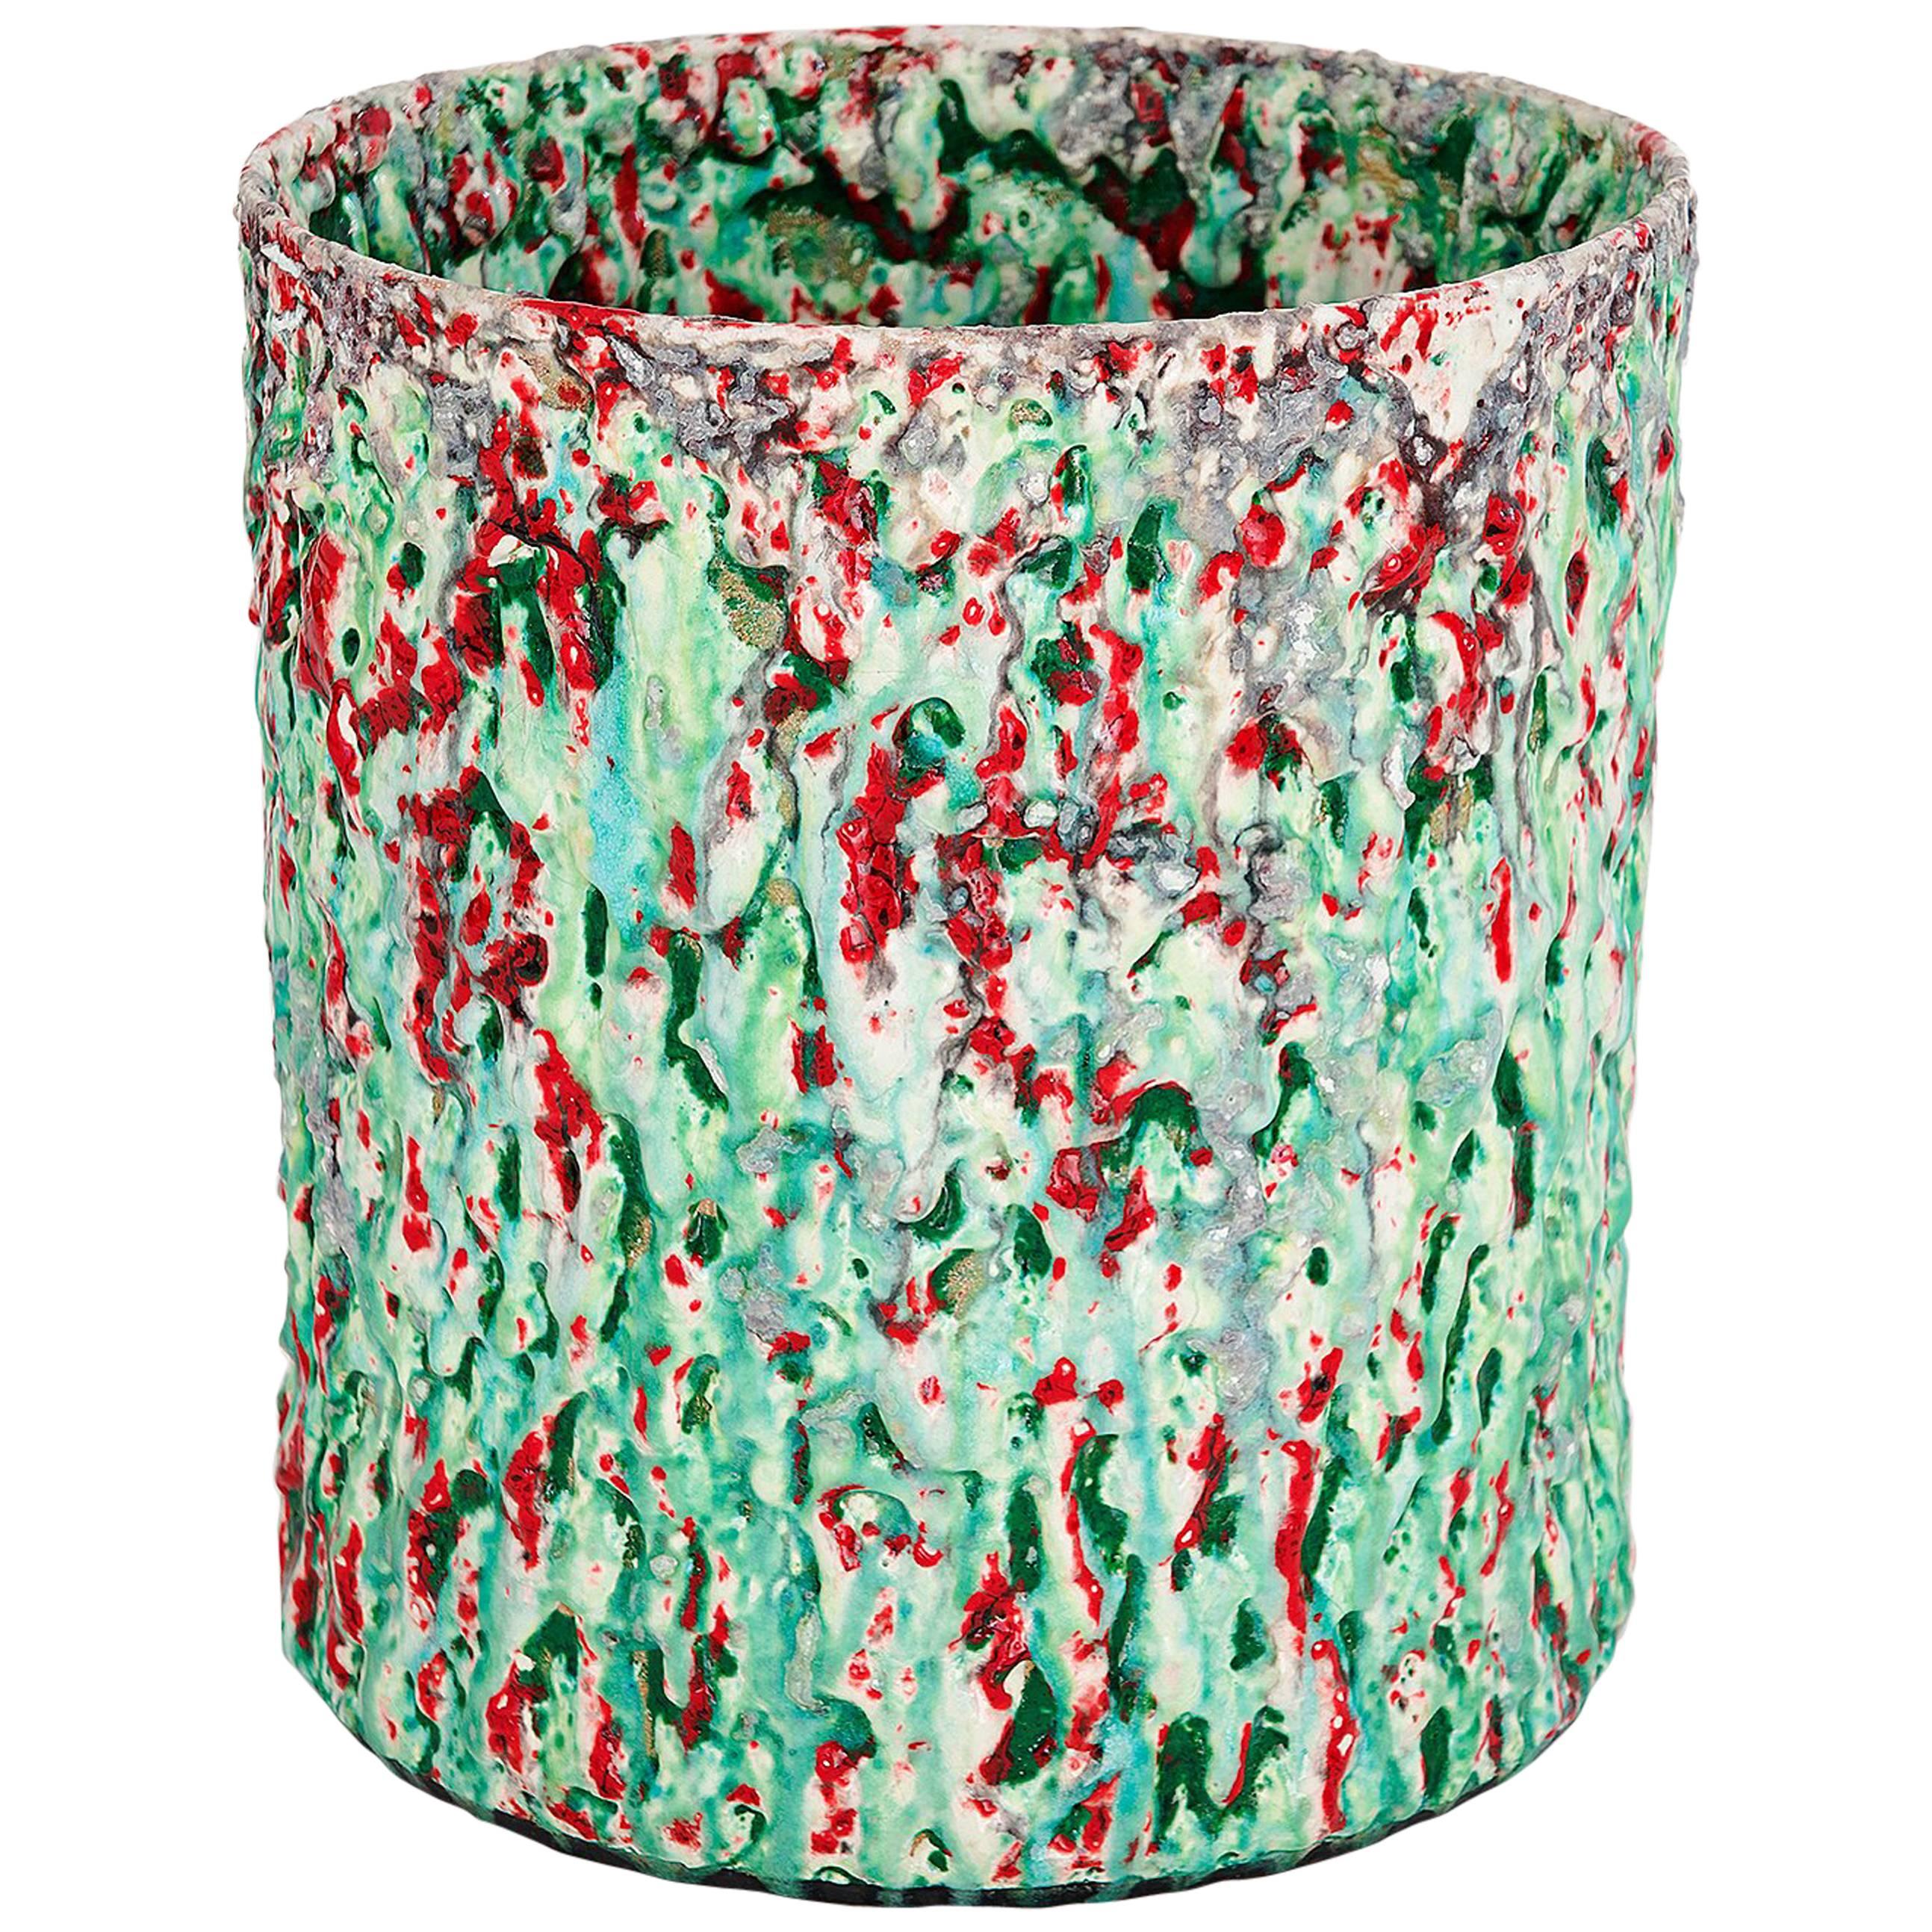 Ceramic Vase Mint Green Red Model “#1718” by Morten Løbner Espersen Contemporary